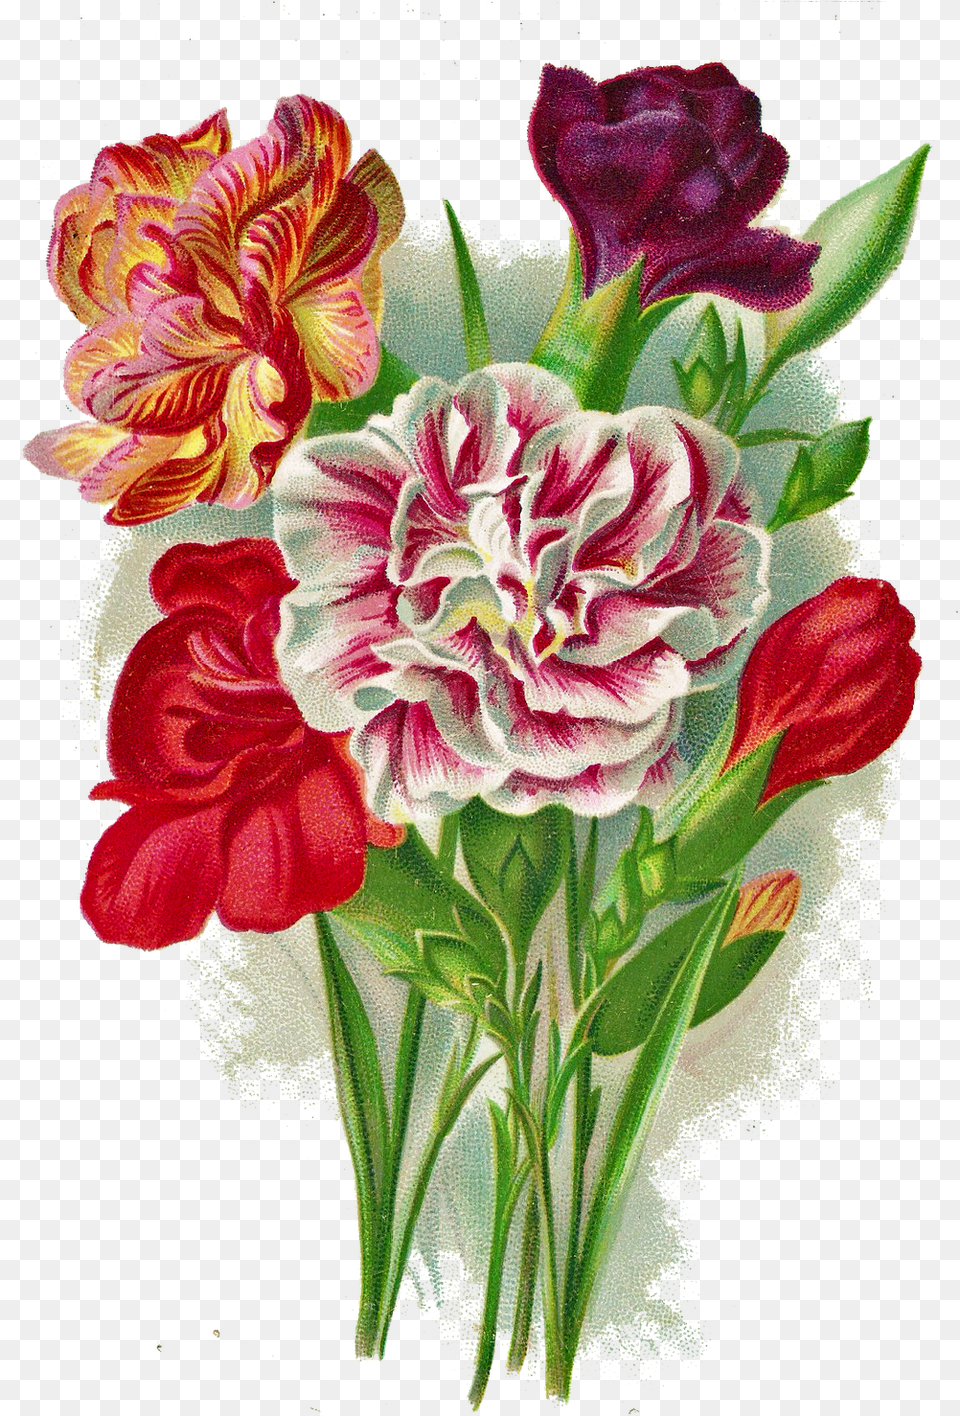 Tanti Auguri Di Buon Onomastico Rosa, Flower Arrangement, Plant, Dahlia, Flower Png